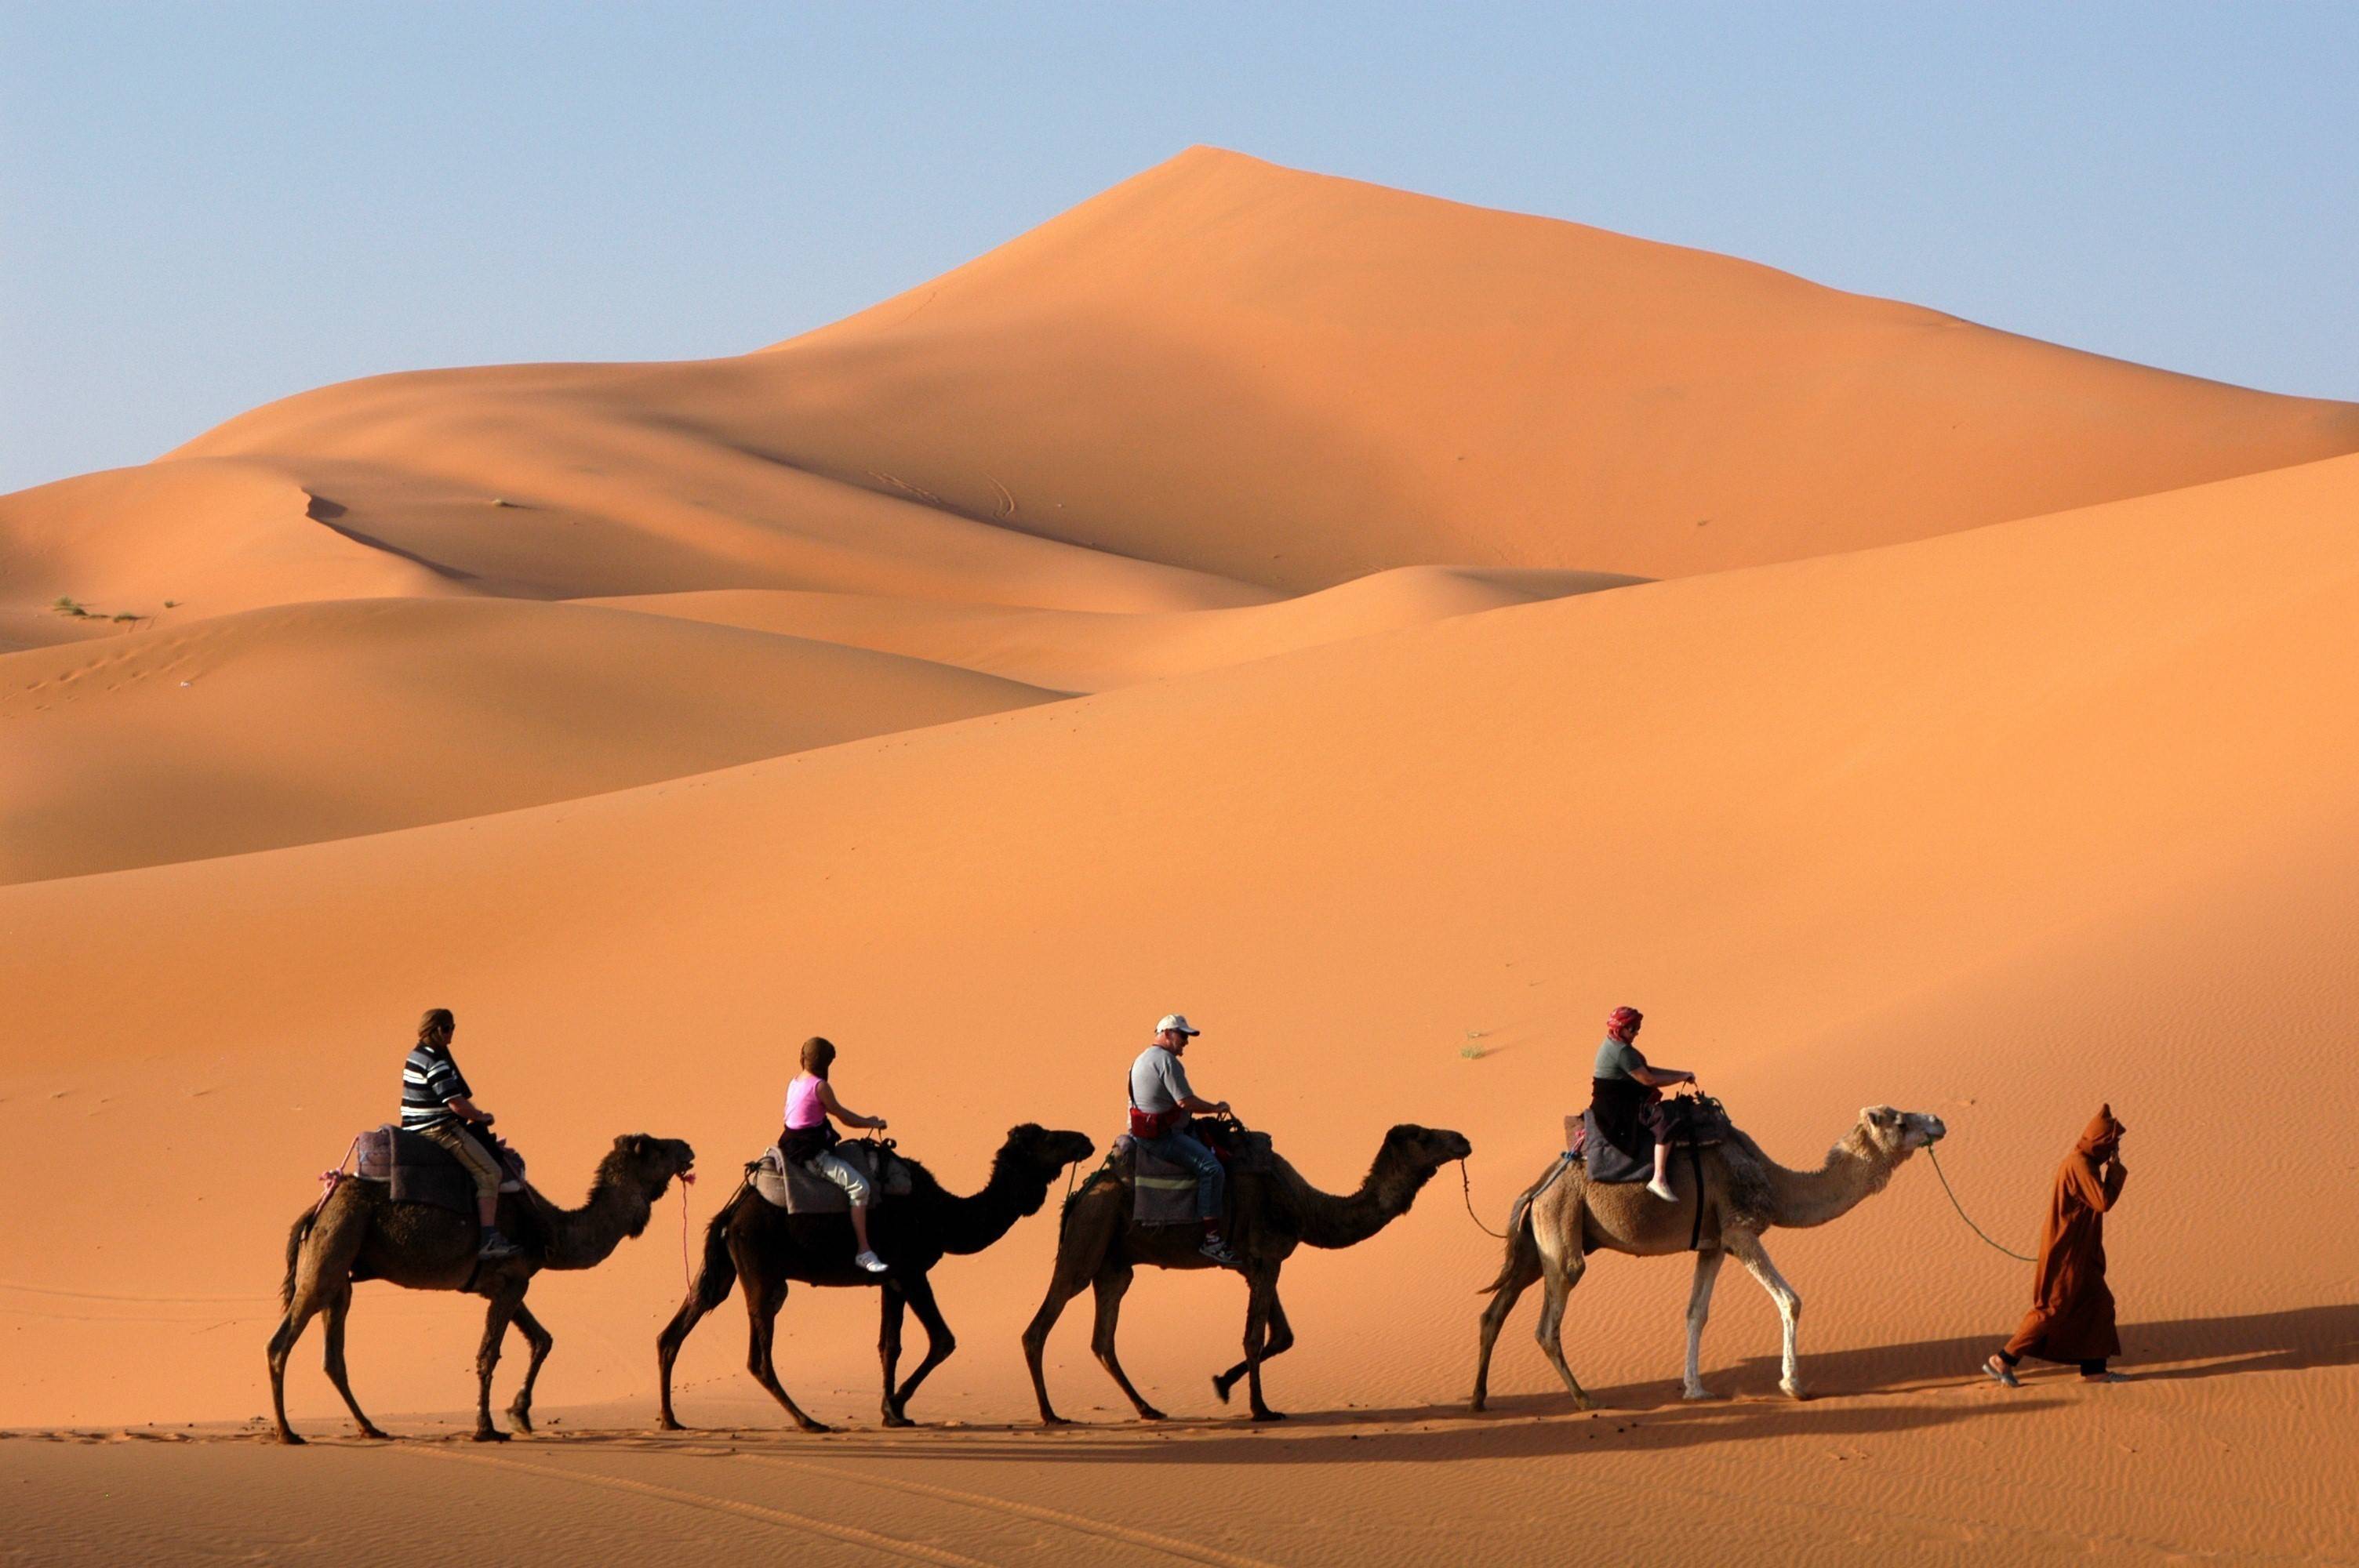 Desert Camel Wallpapers   Top Free Desert Camel Backgrounds